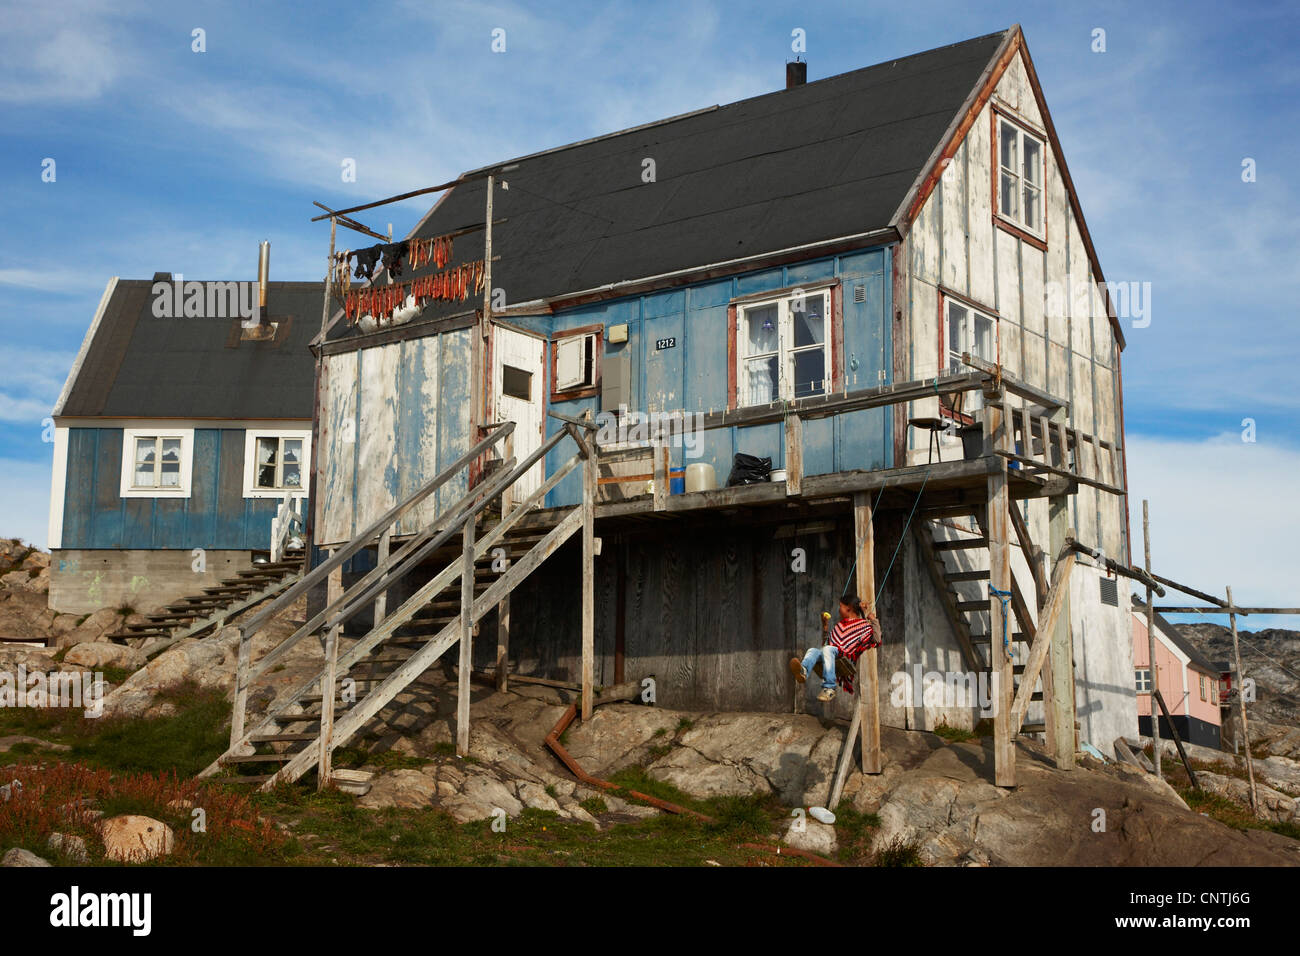 girl seesawing at wooden house, Greenland, Ammassalik, East Greenland, Tiniteqilaq Stock Photo